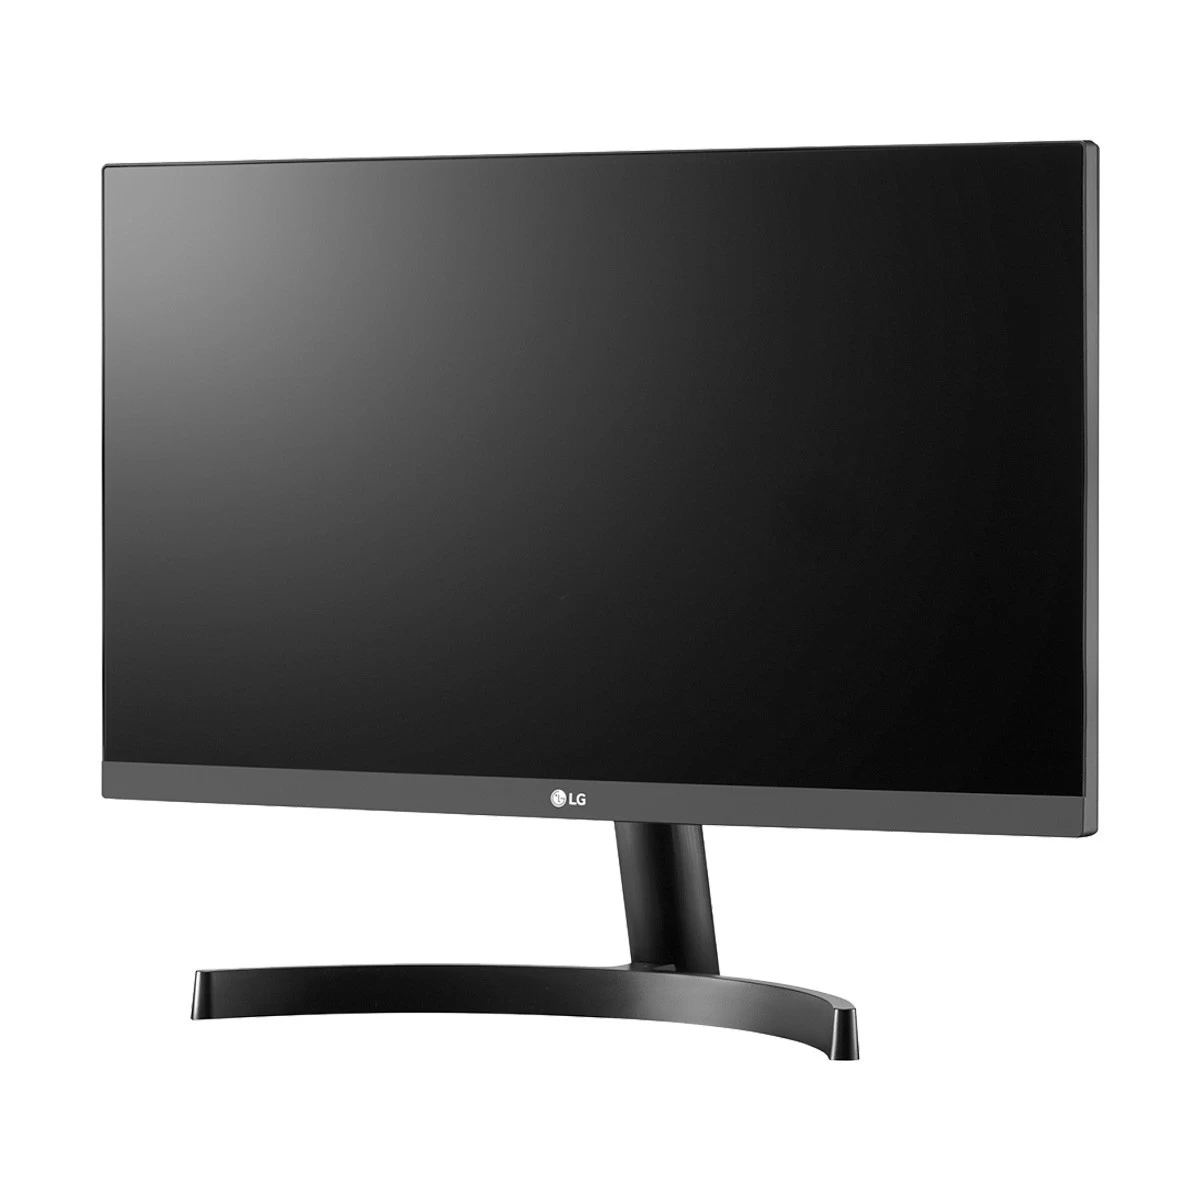 LG 22MK600M Monitor price in BD